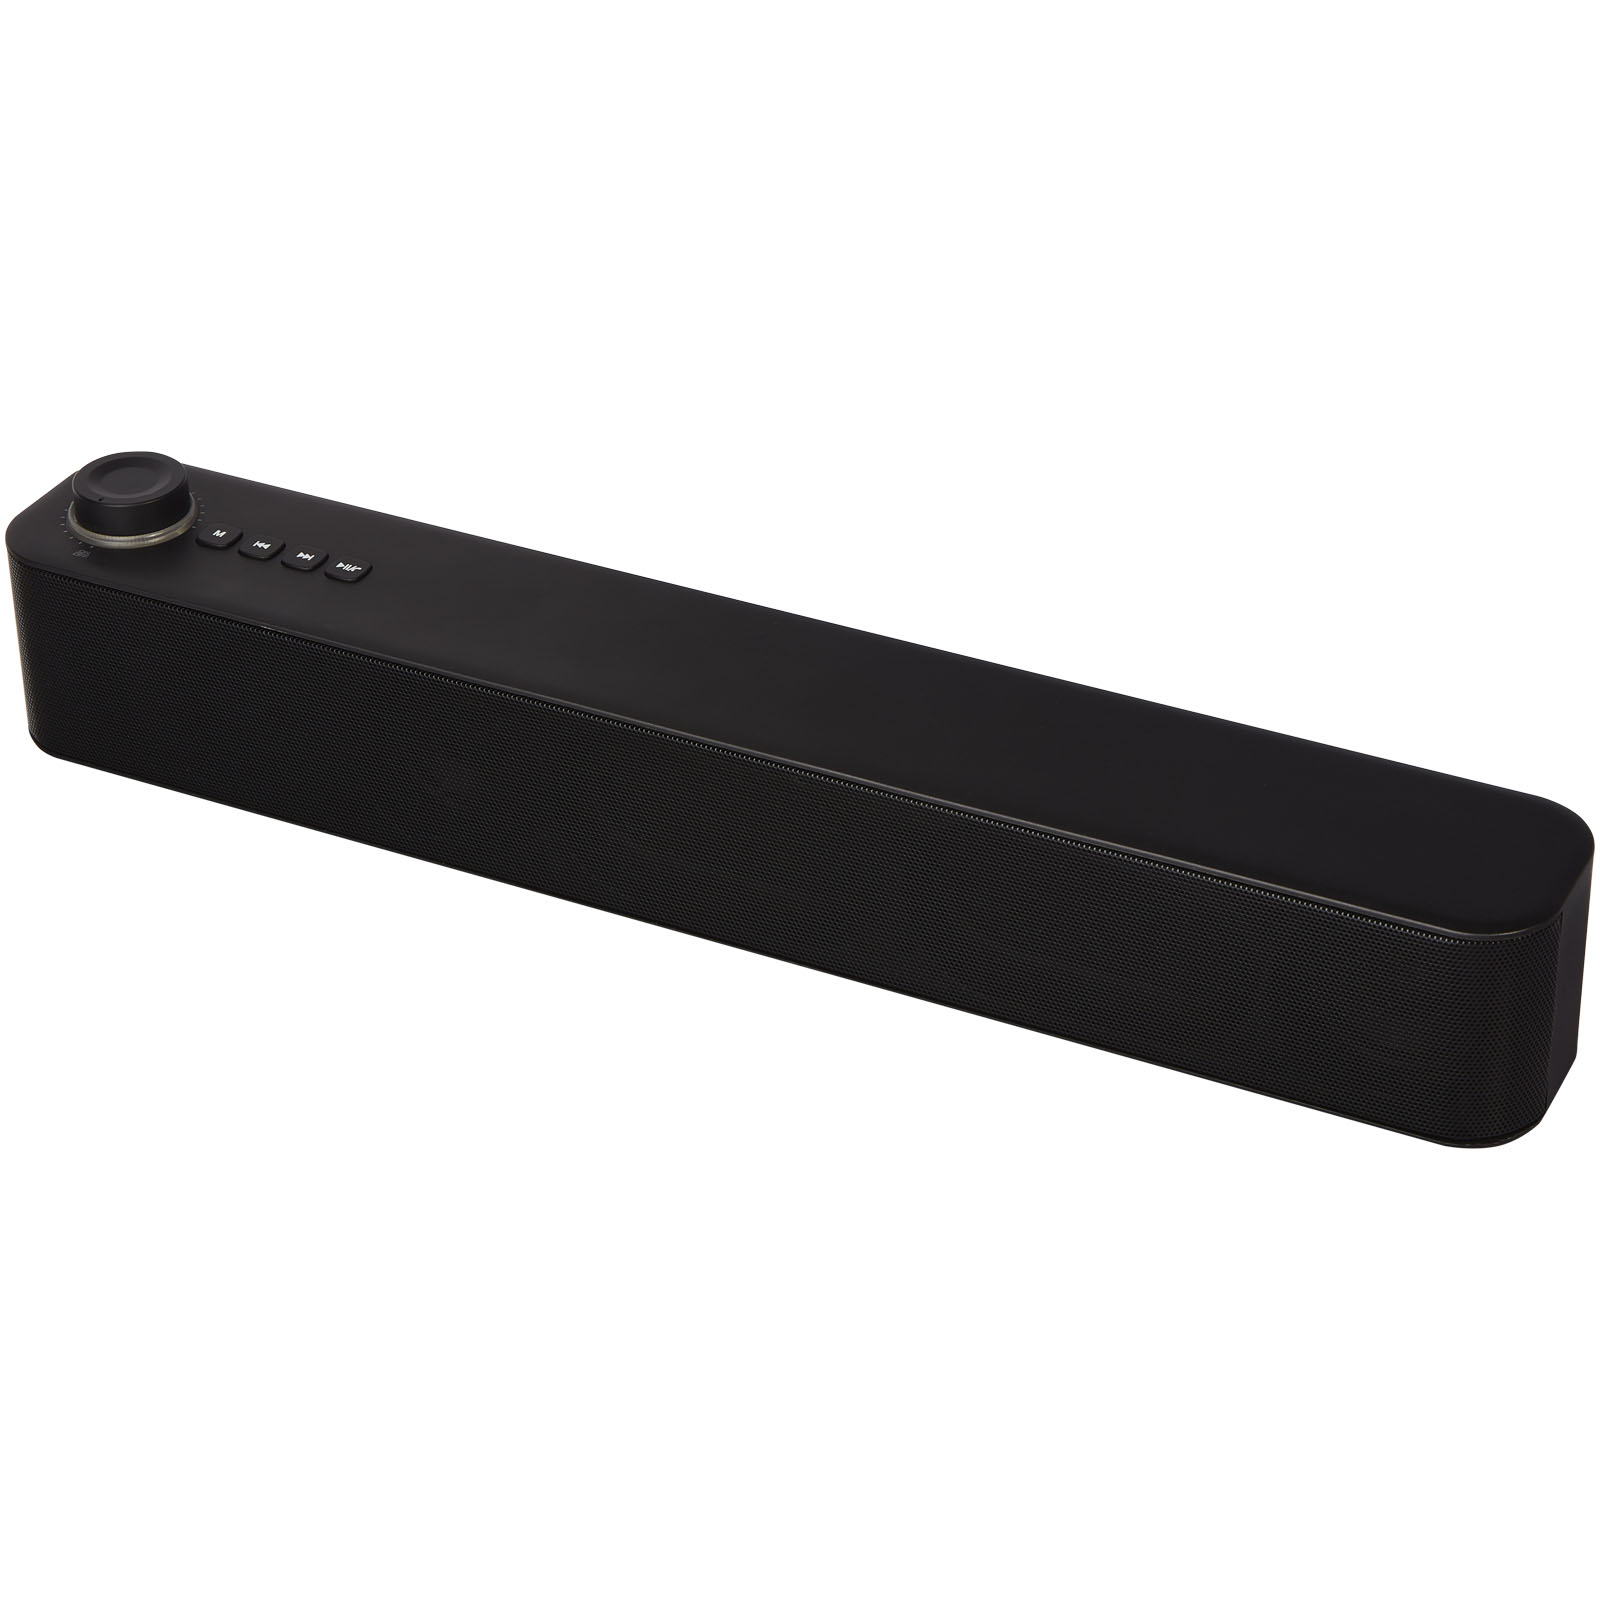 Speakers - Hybrid 2 x 5W premium Bluetooth® sound bar